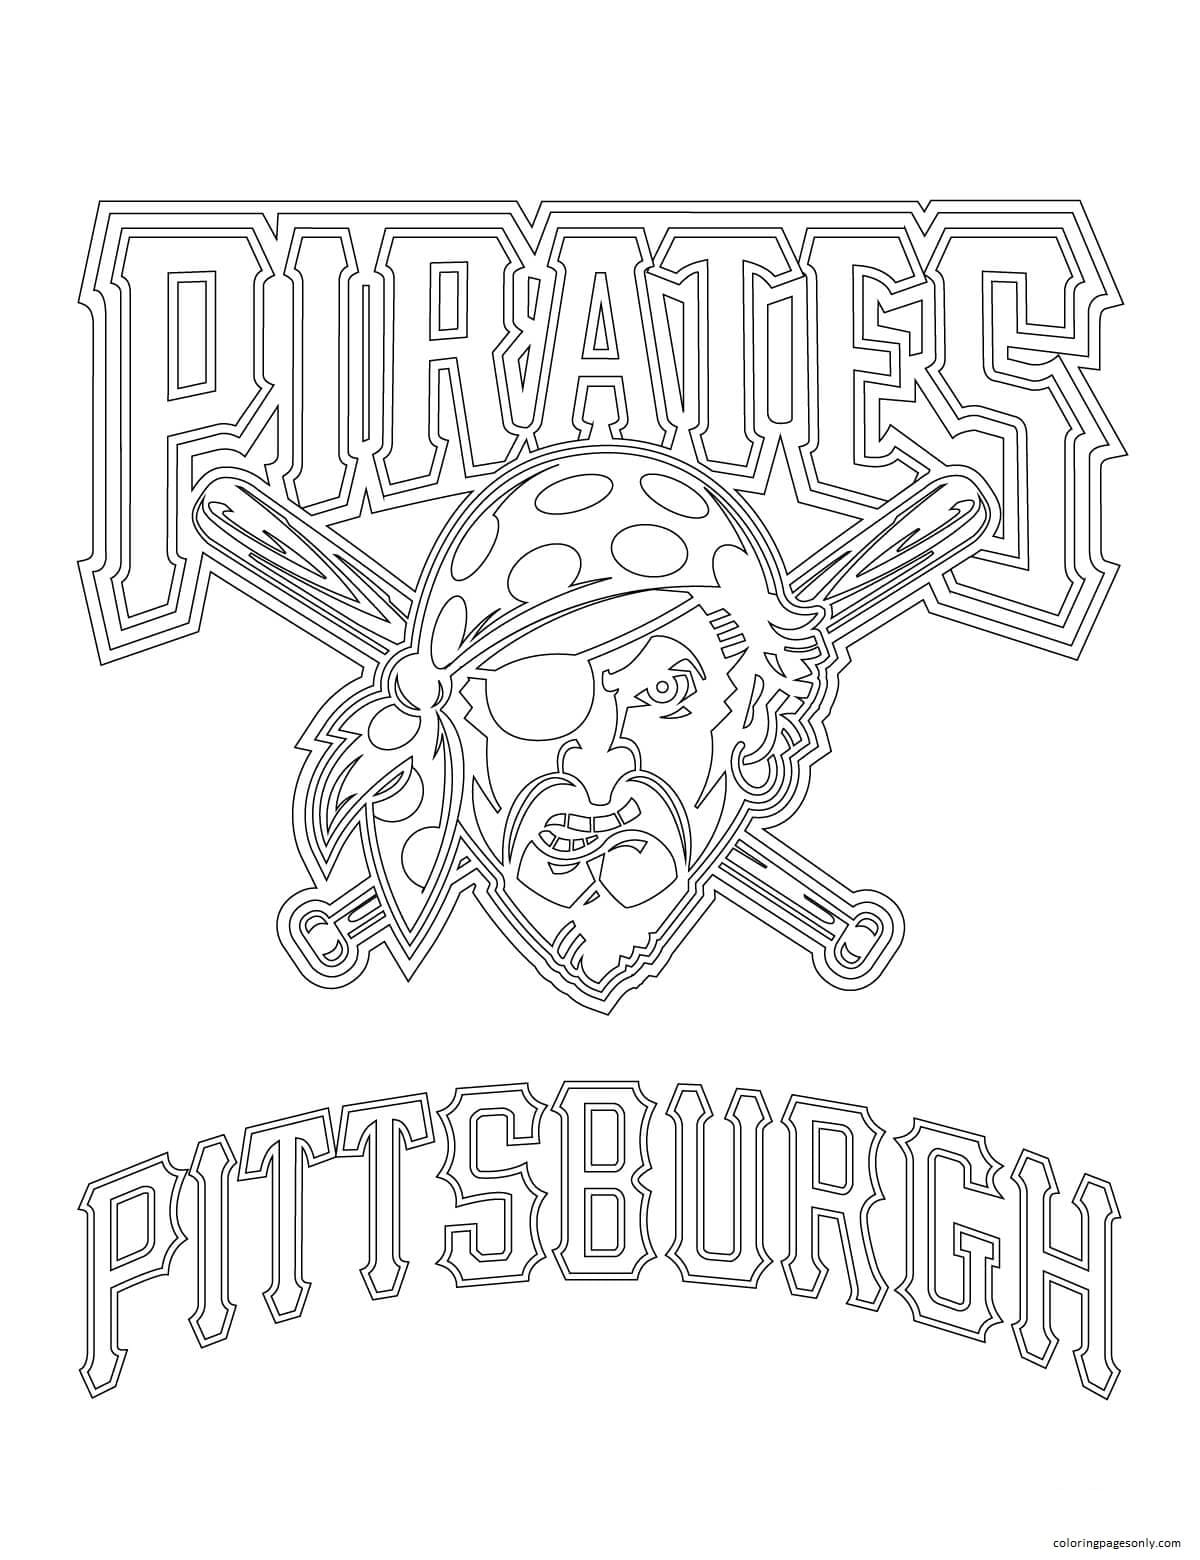 Pittsburgh Pirates-logo van honkbal